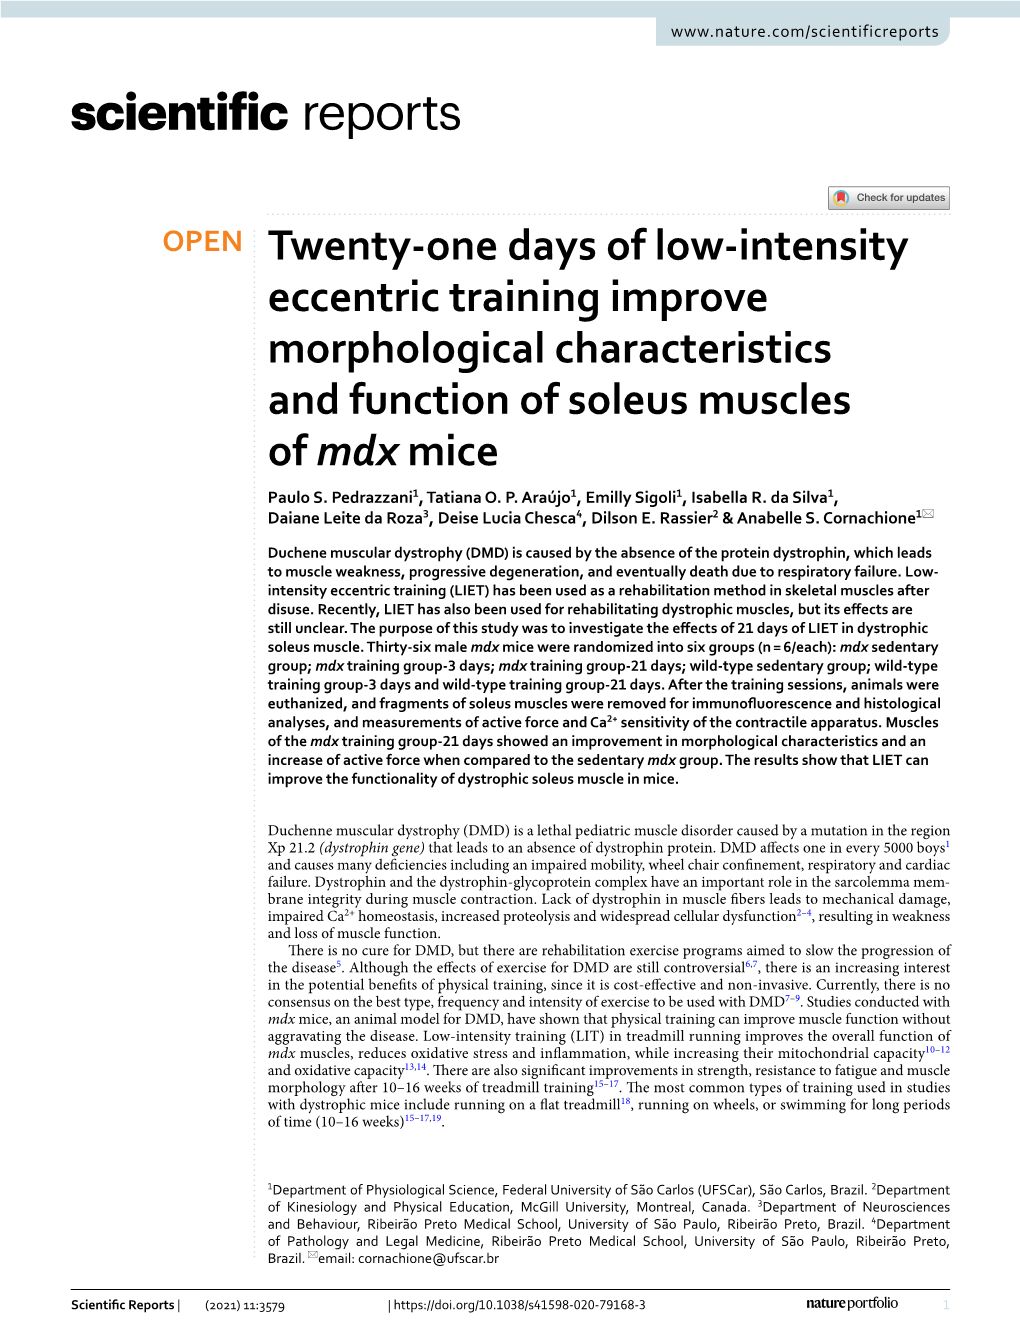 Twenty-One Days of Low-Intensity Eccentric Training Improve